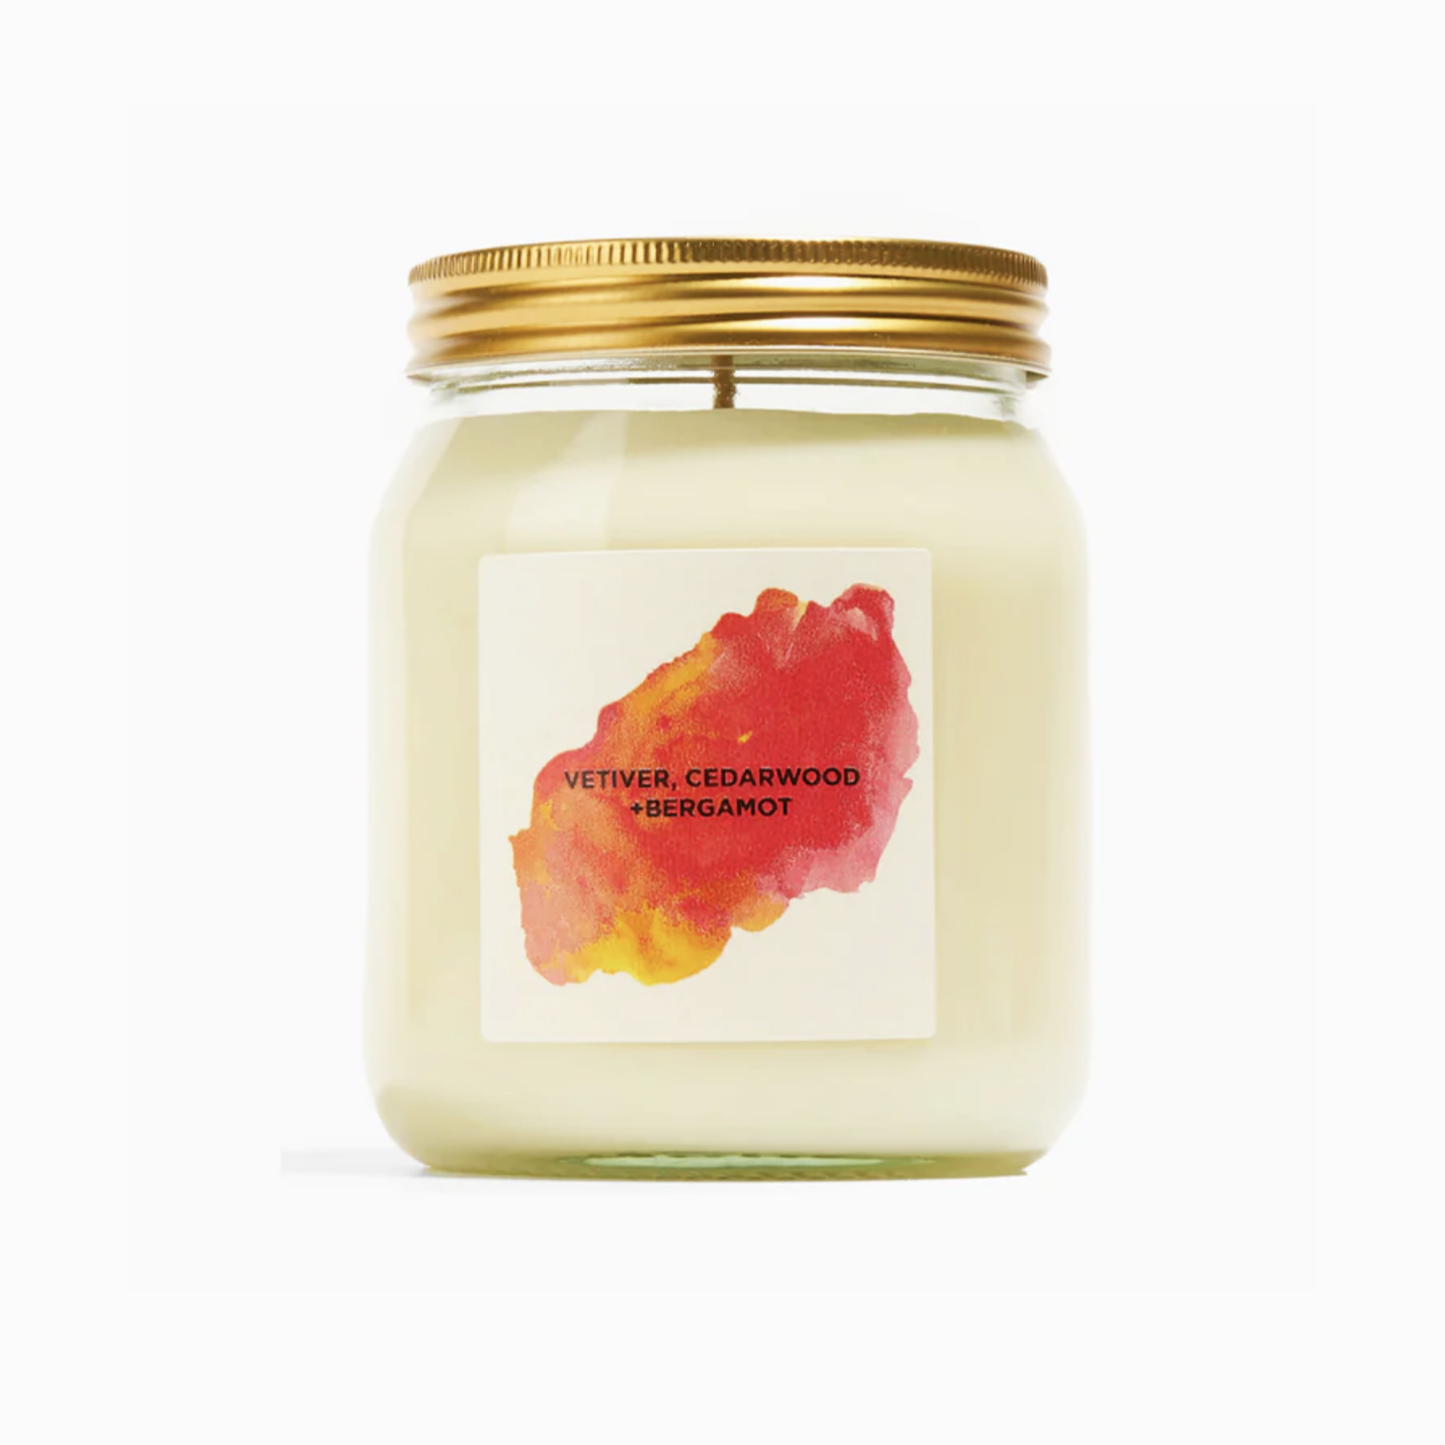 Vetiver, Cedarwood + Bergamot aromatherapy candle - Plum & Belle